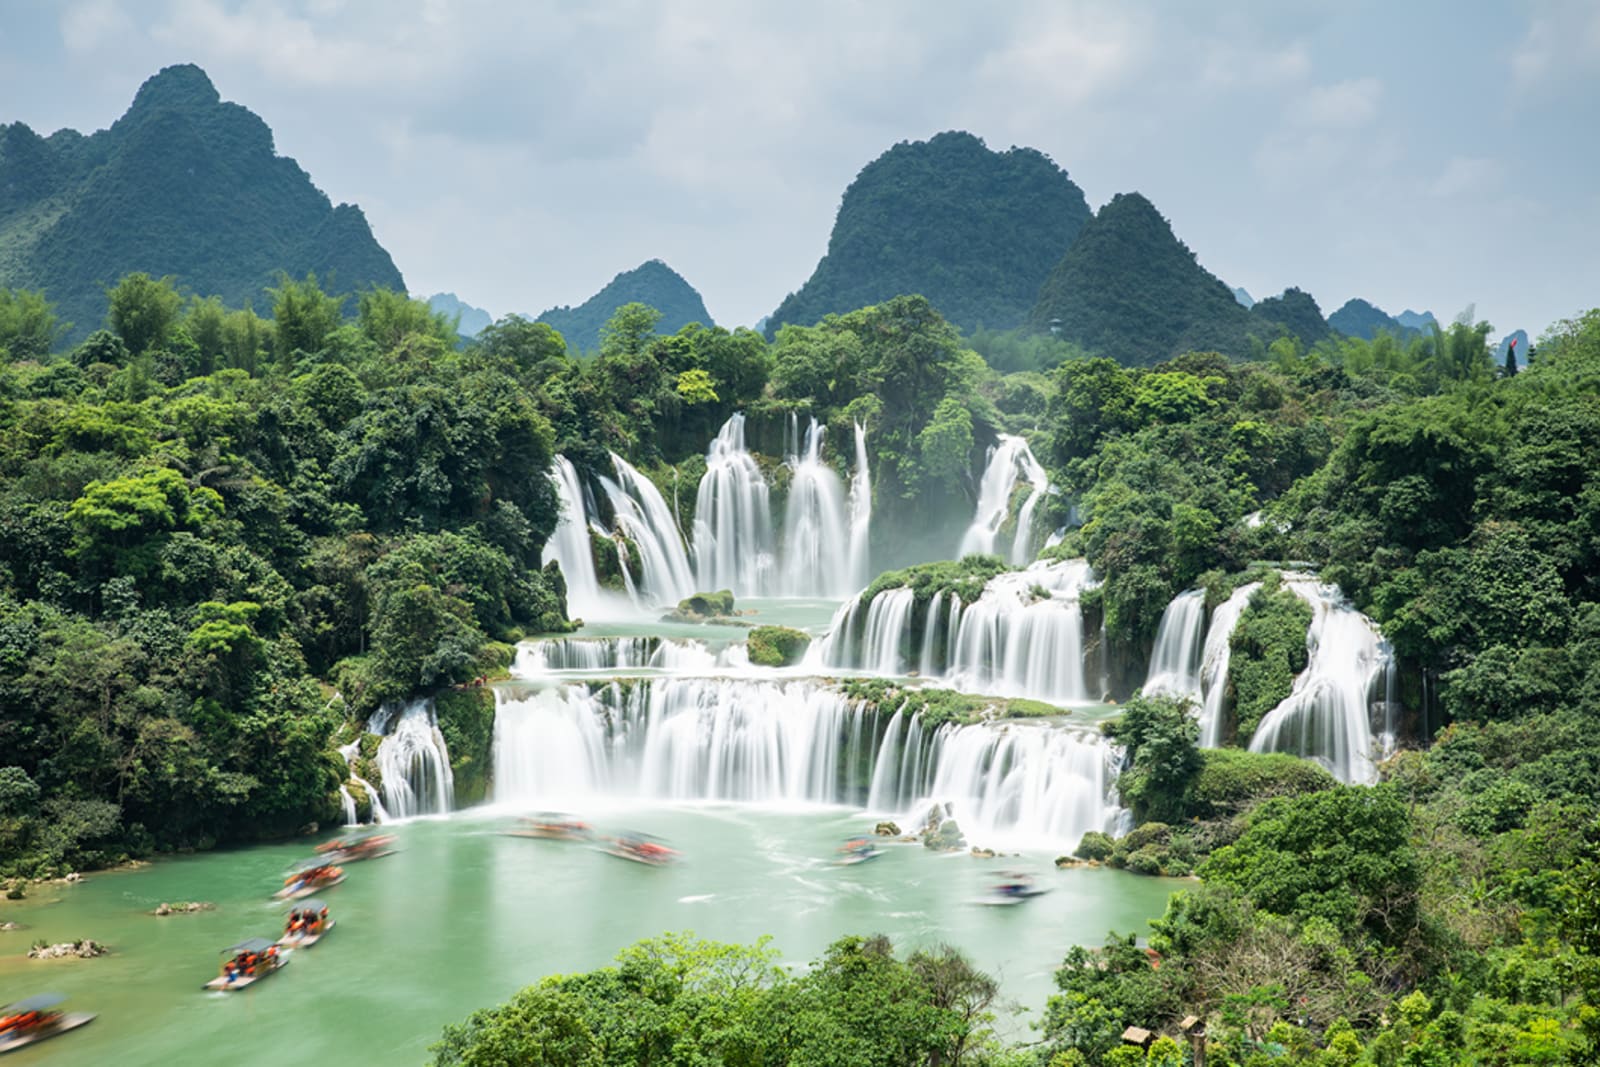 The Bản Giốc–Detian Falls span China and Vietnam